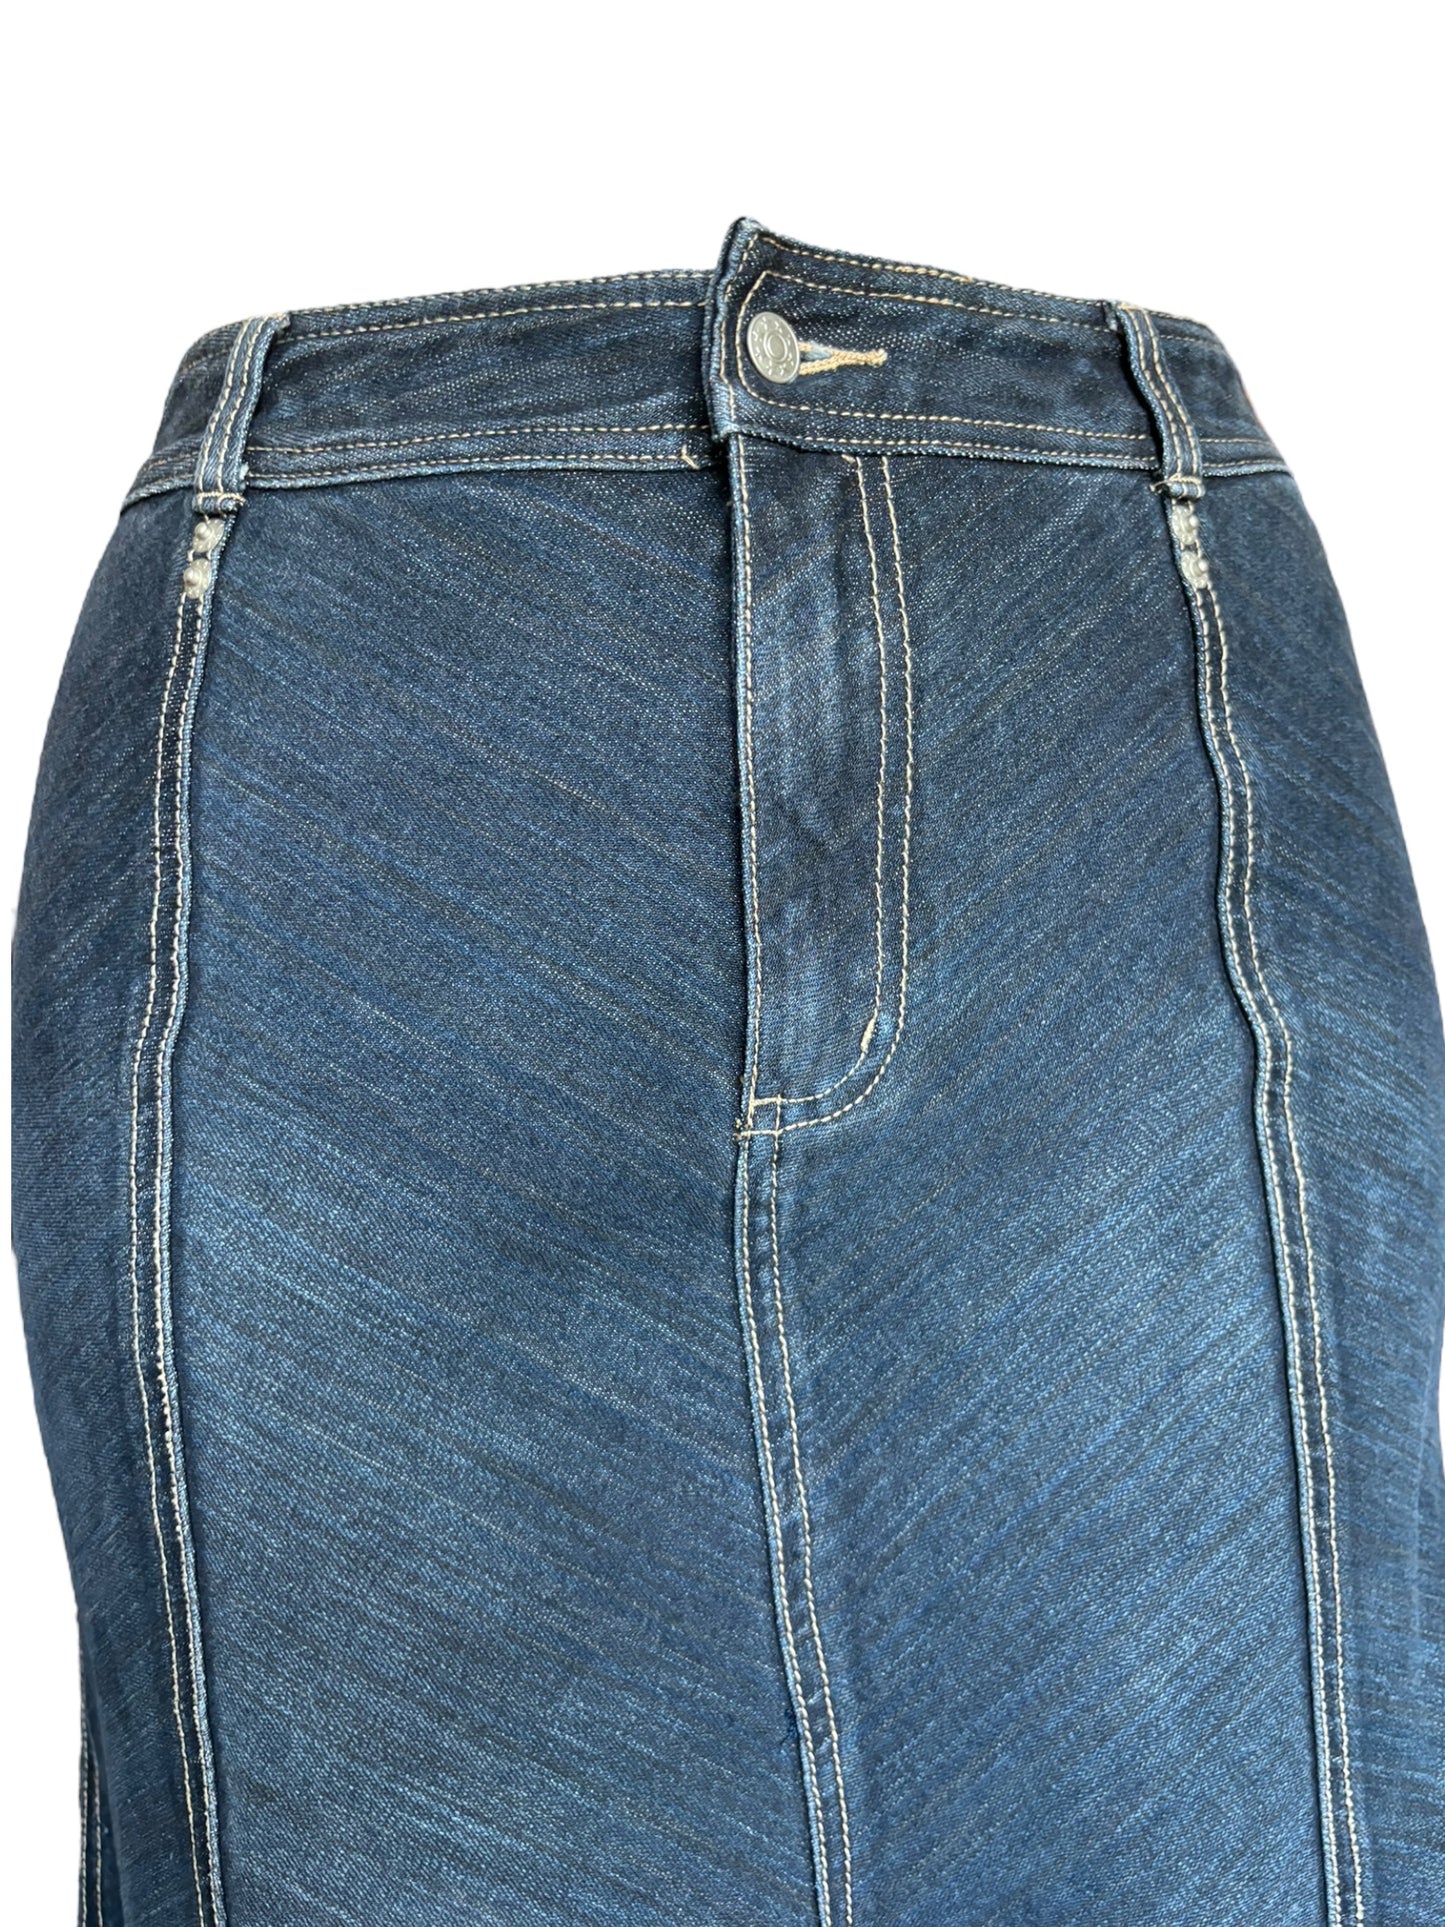 Vintage Denim Skirt - M